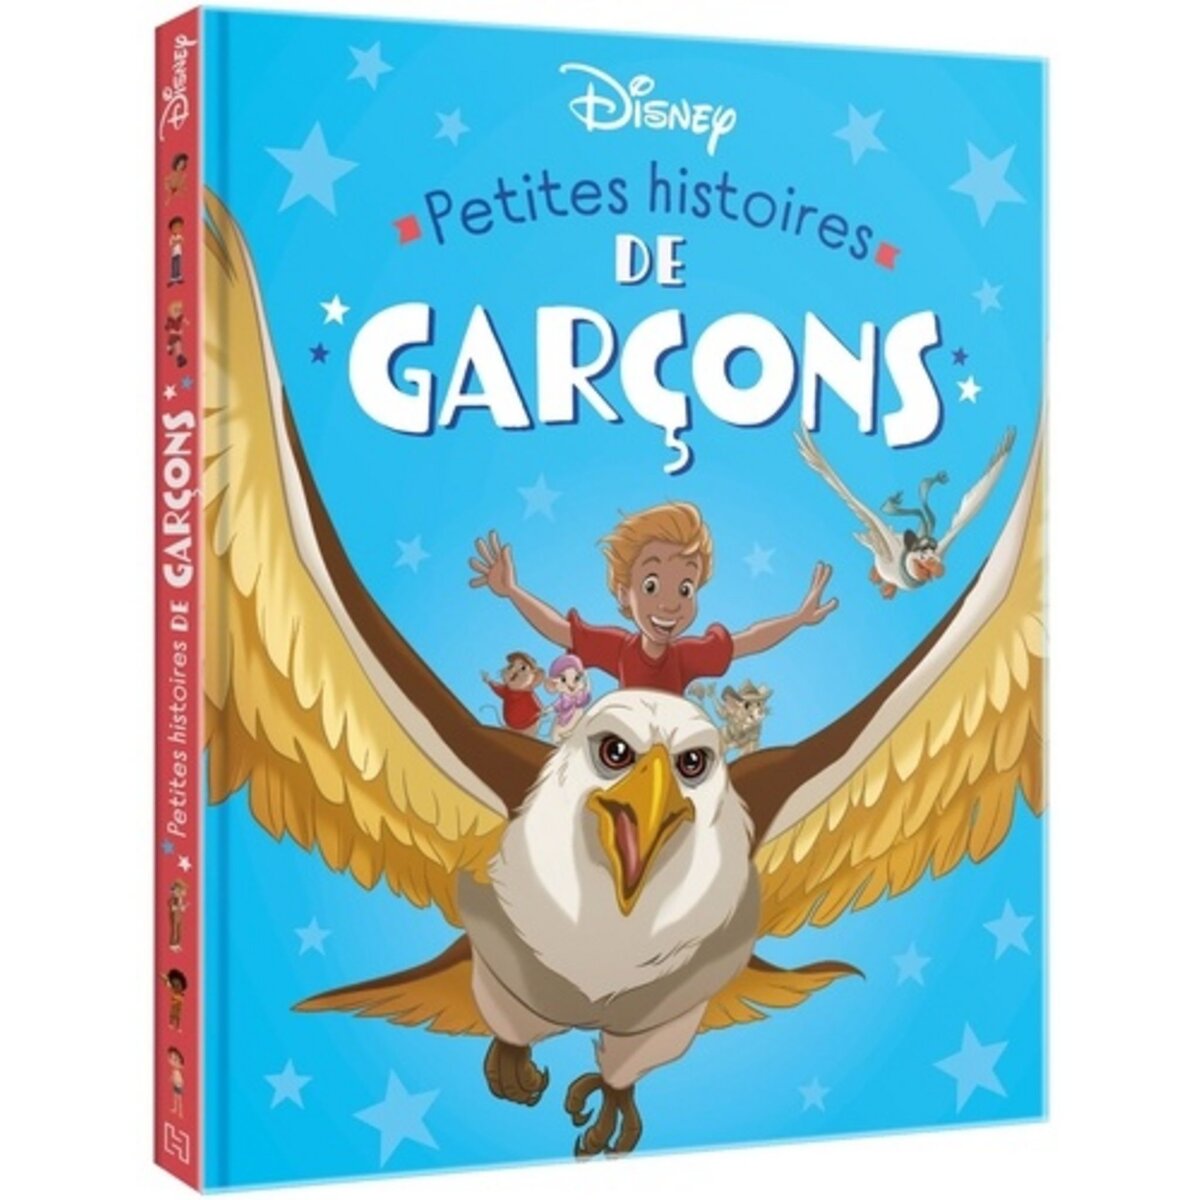  PETITES HISTOIRES DE GARCONS, Disney